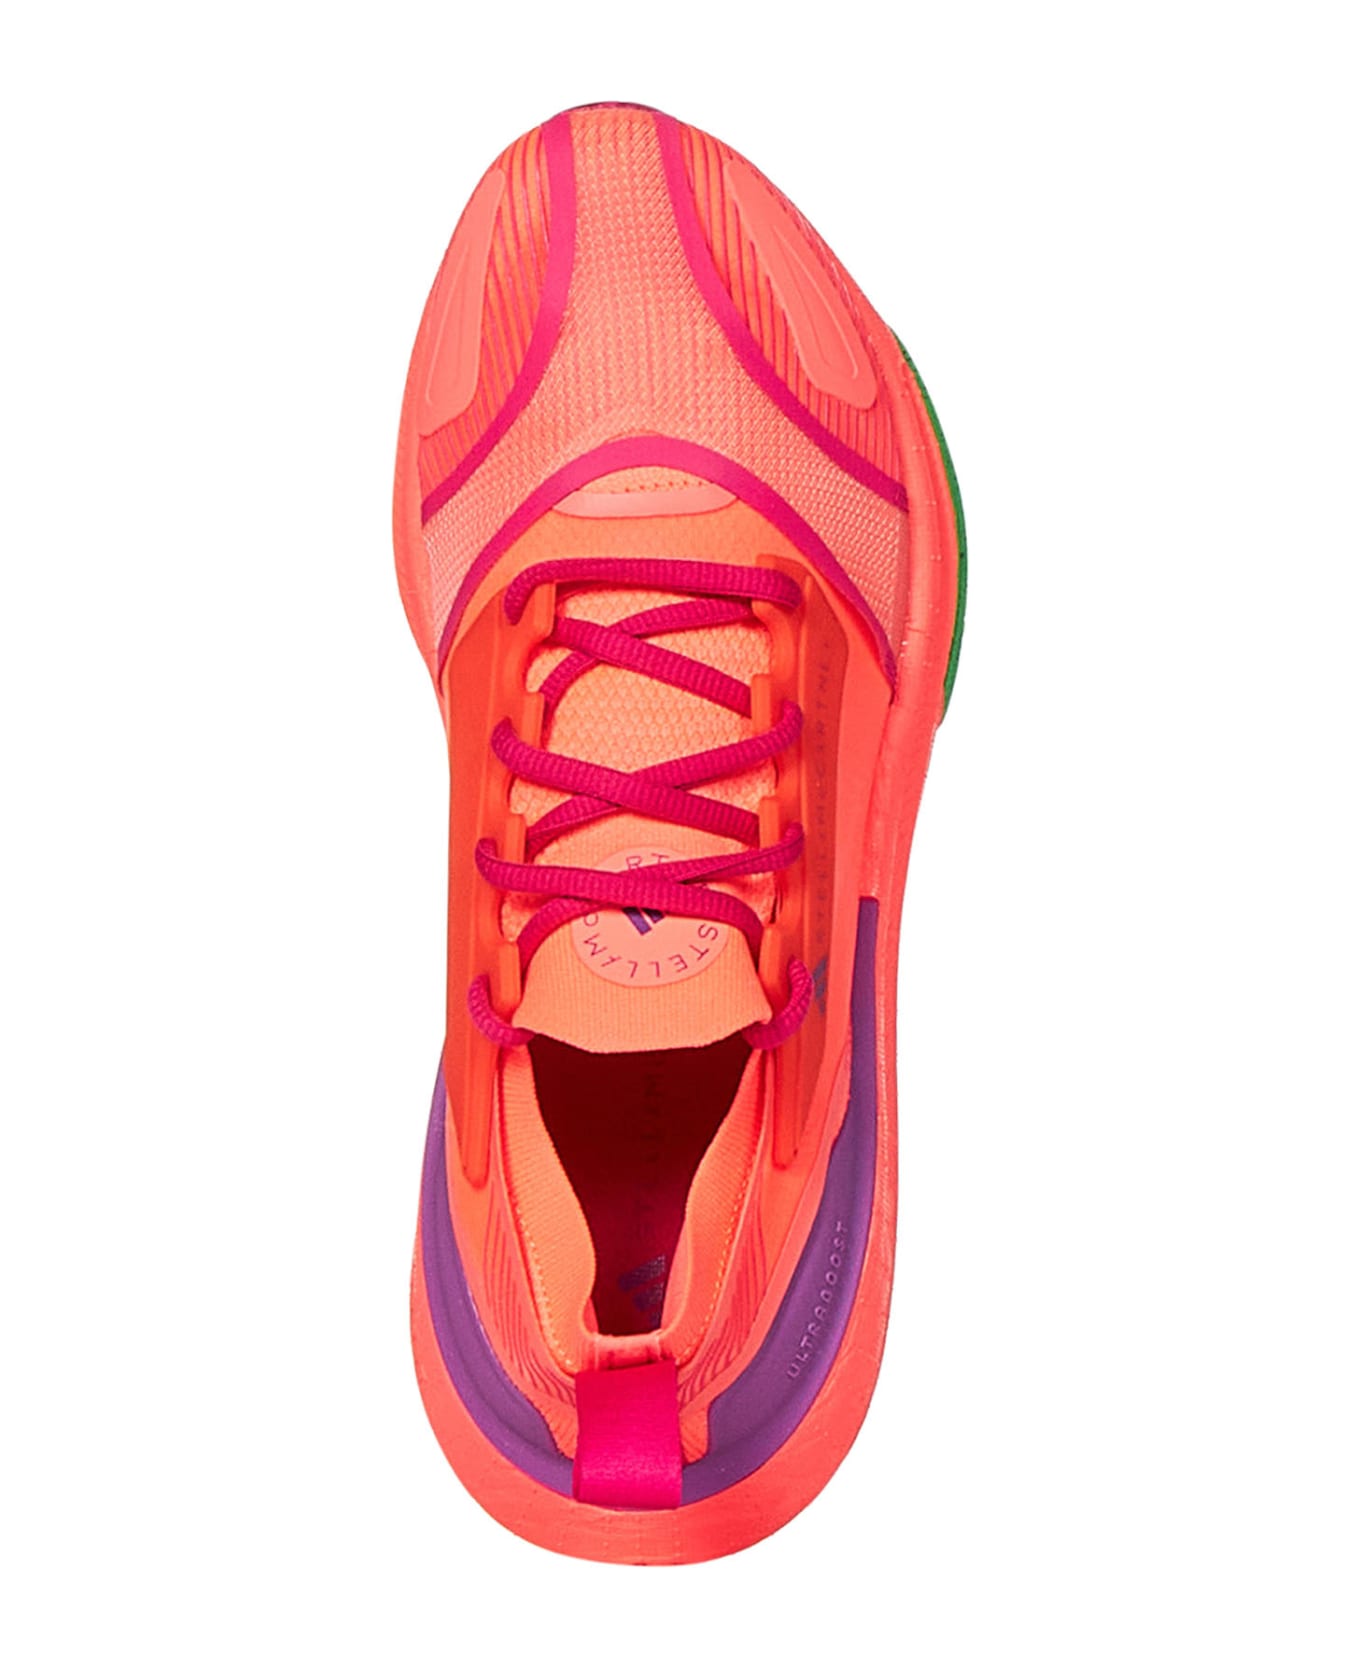 Adidas by Stella McCartney Ultraboost Light Sneakers - Turbo スニーカー